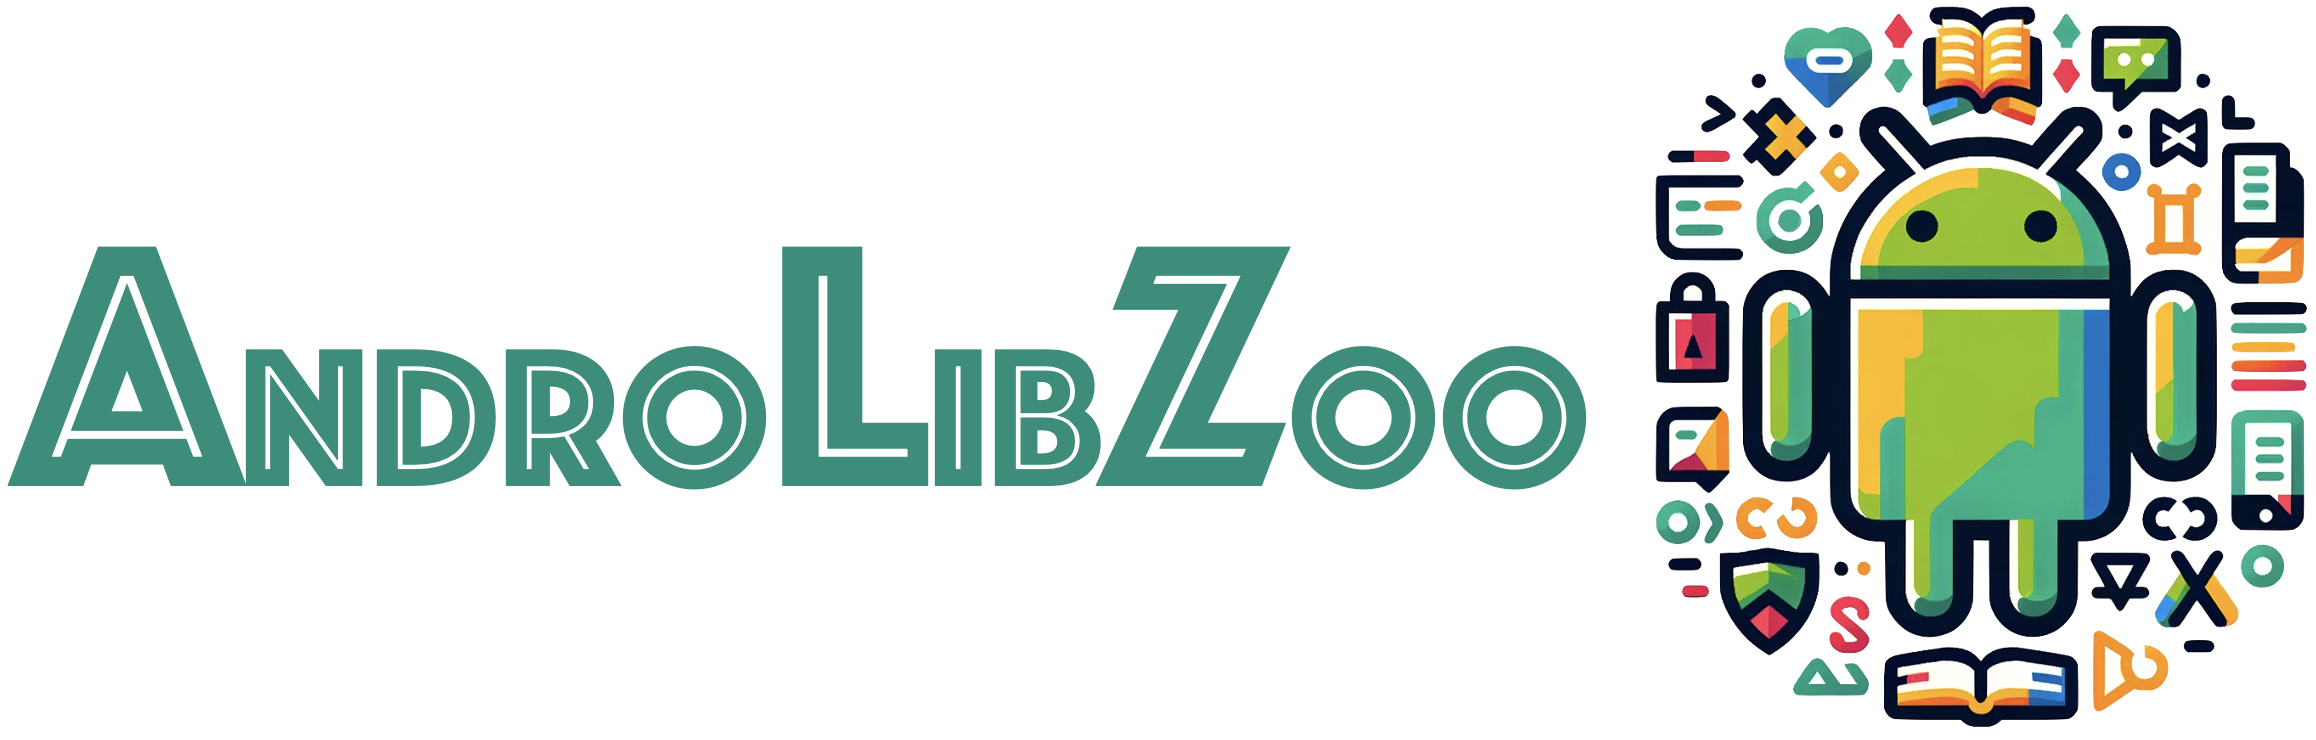 androlibzoo_logo.png